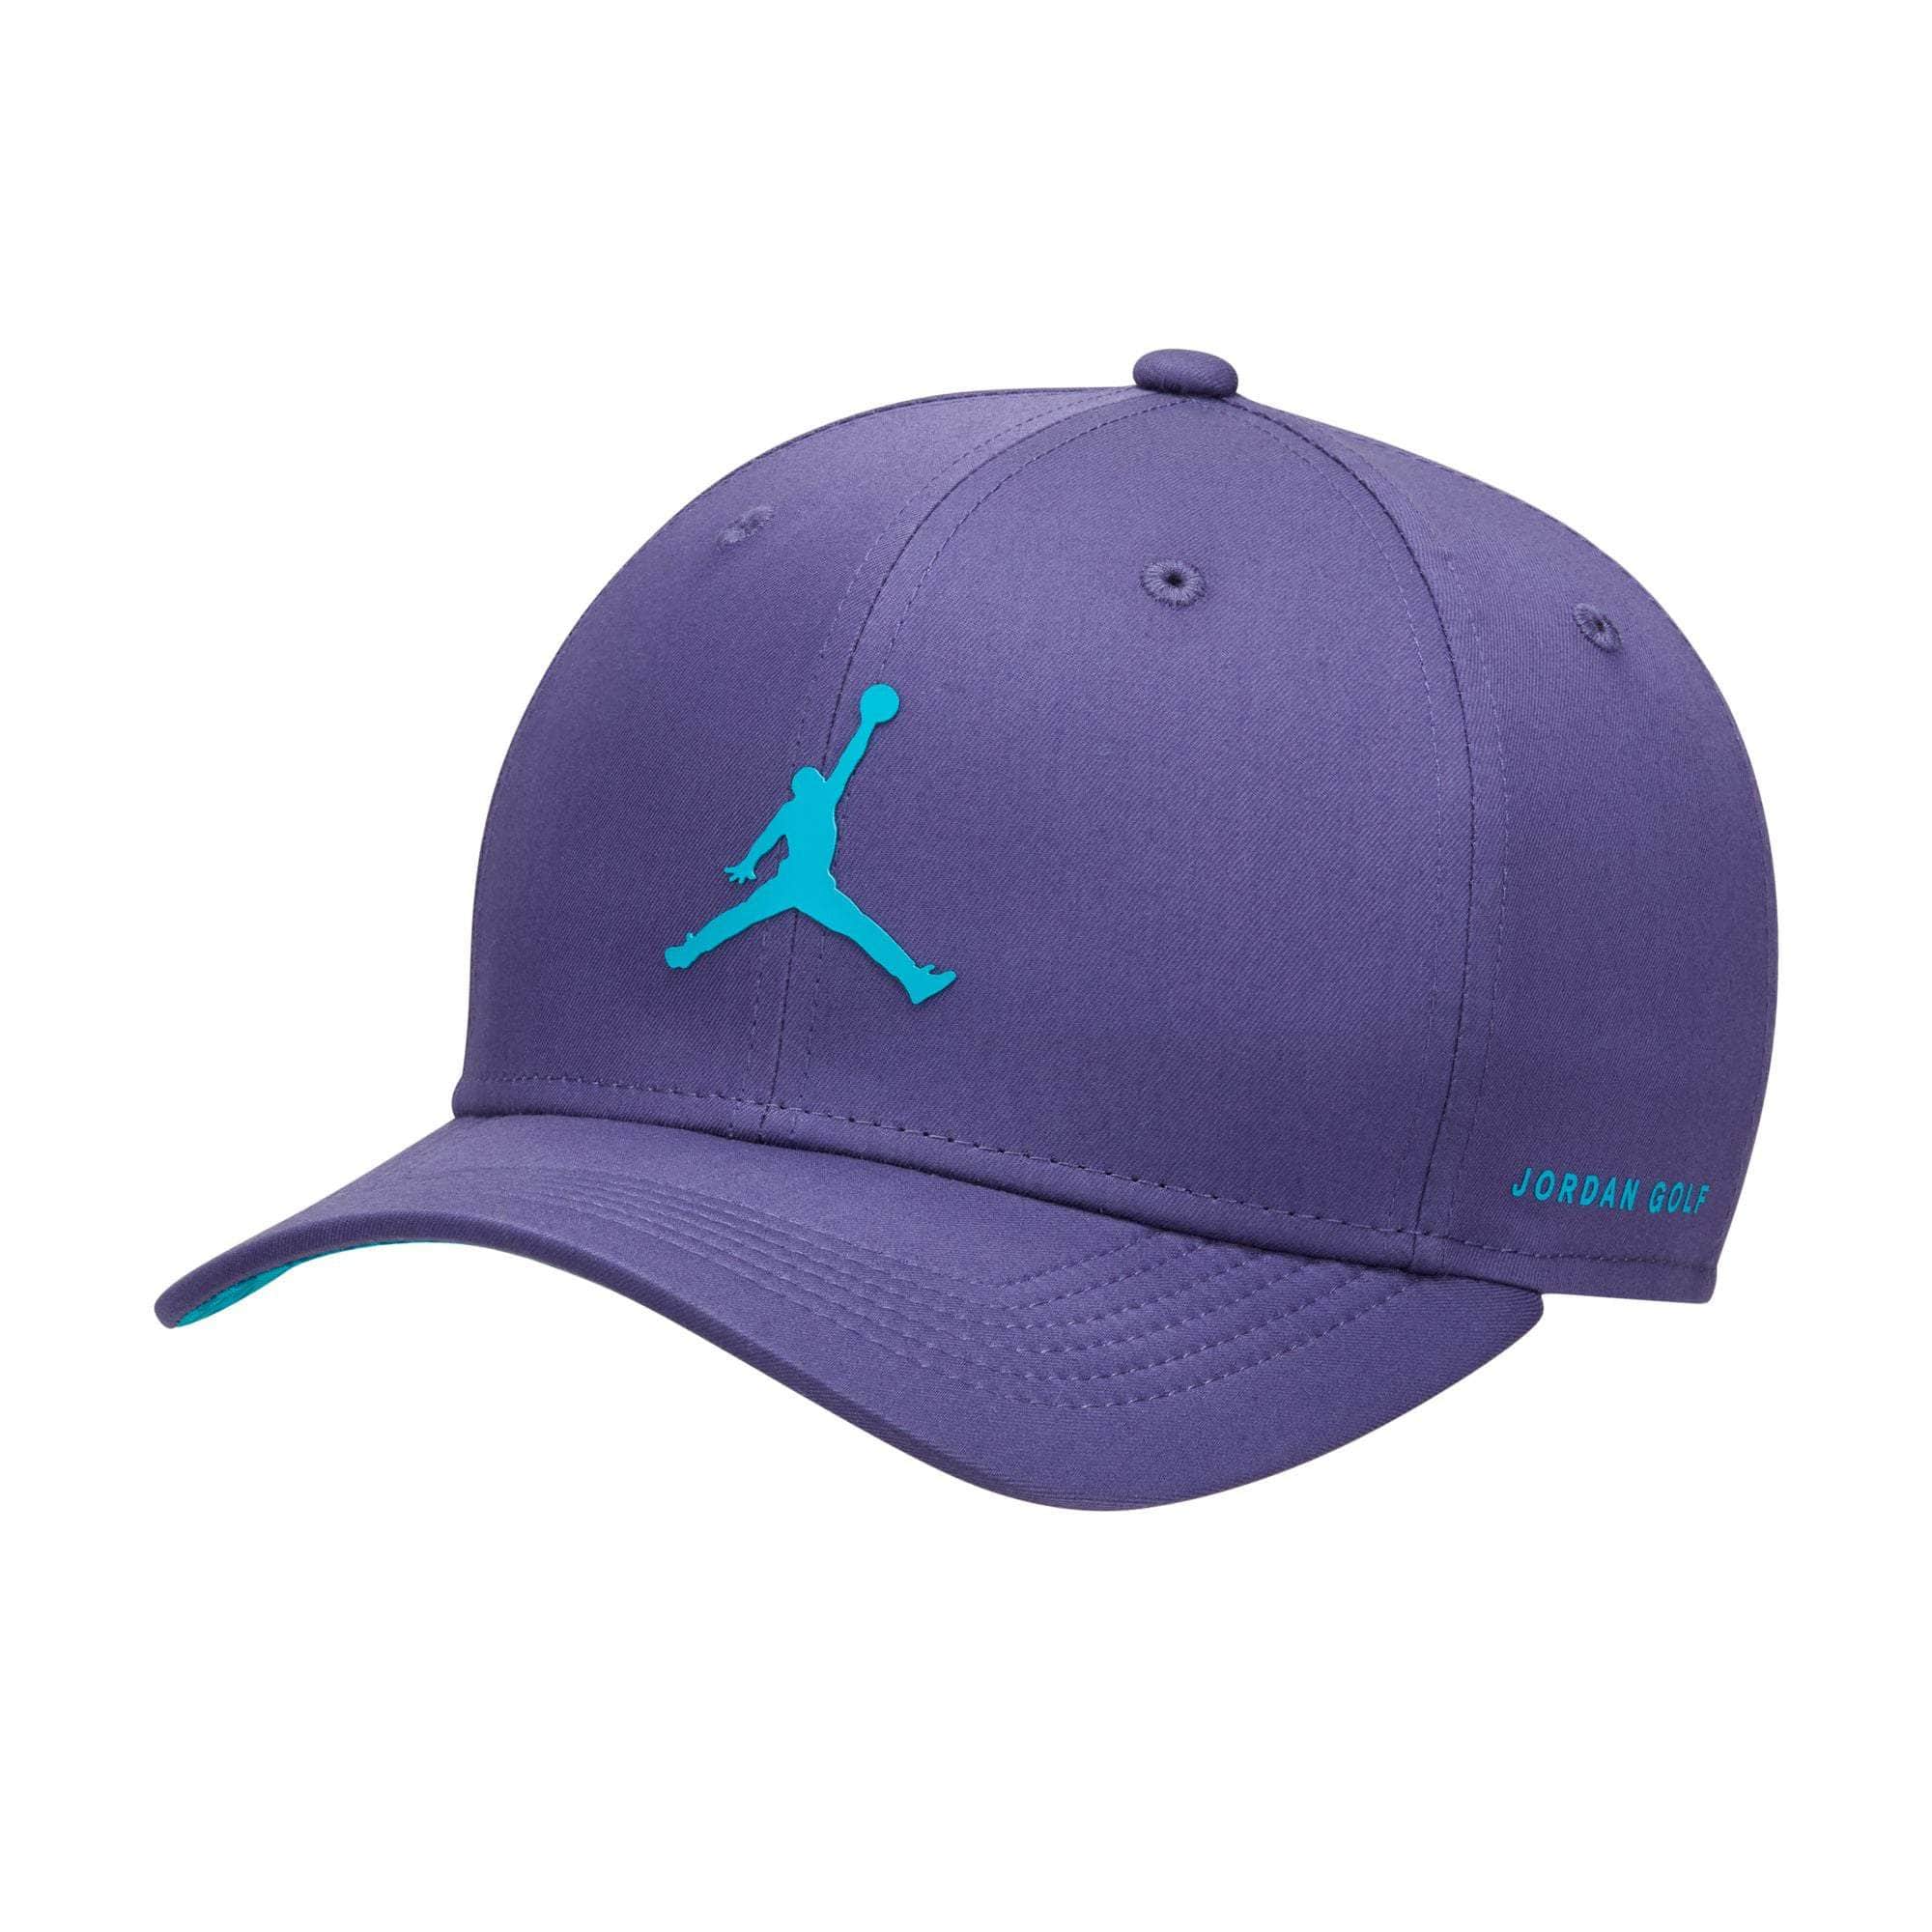 Air Jordan Golf Rise Cap Adjustable Structured Hat